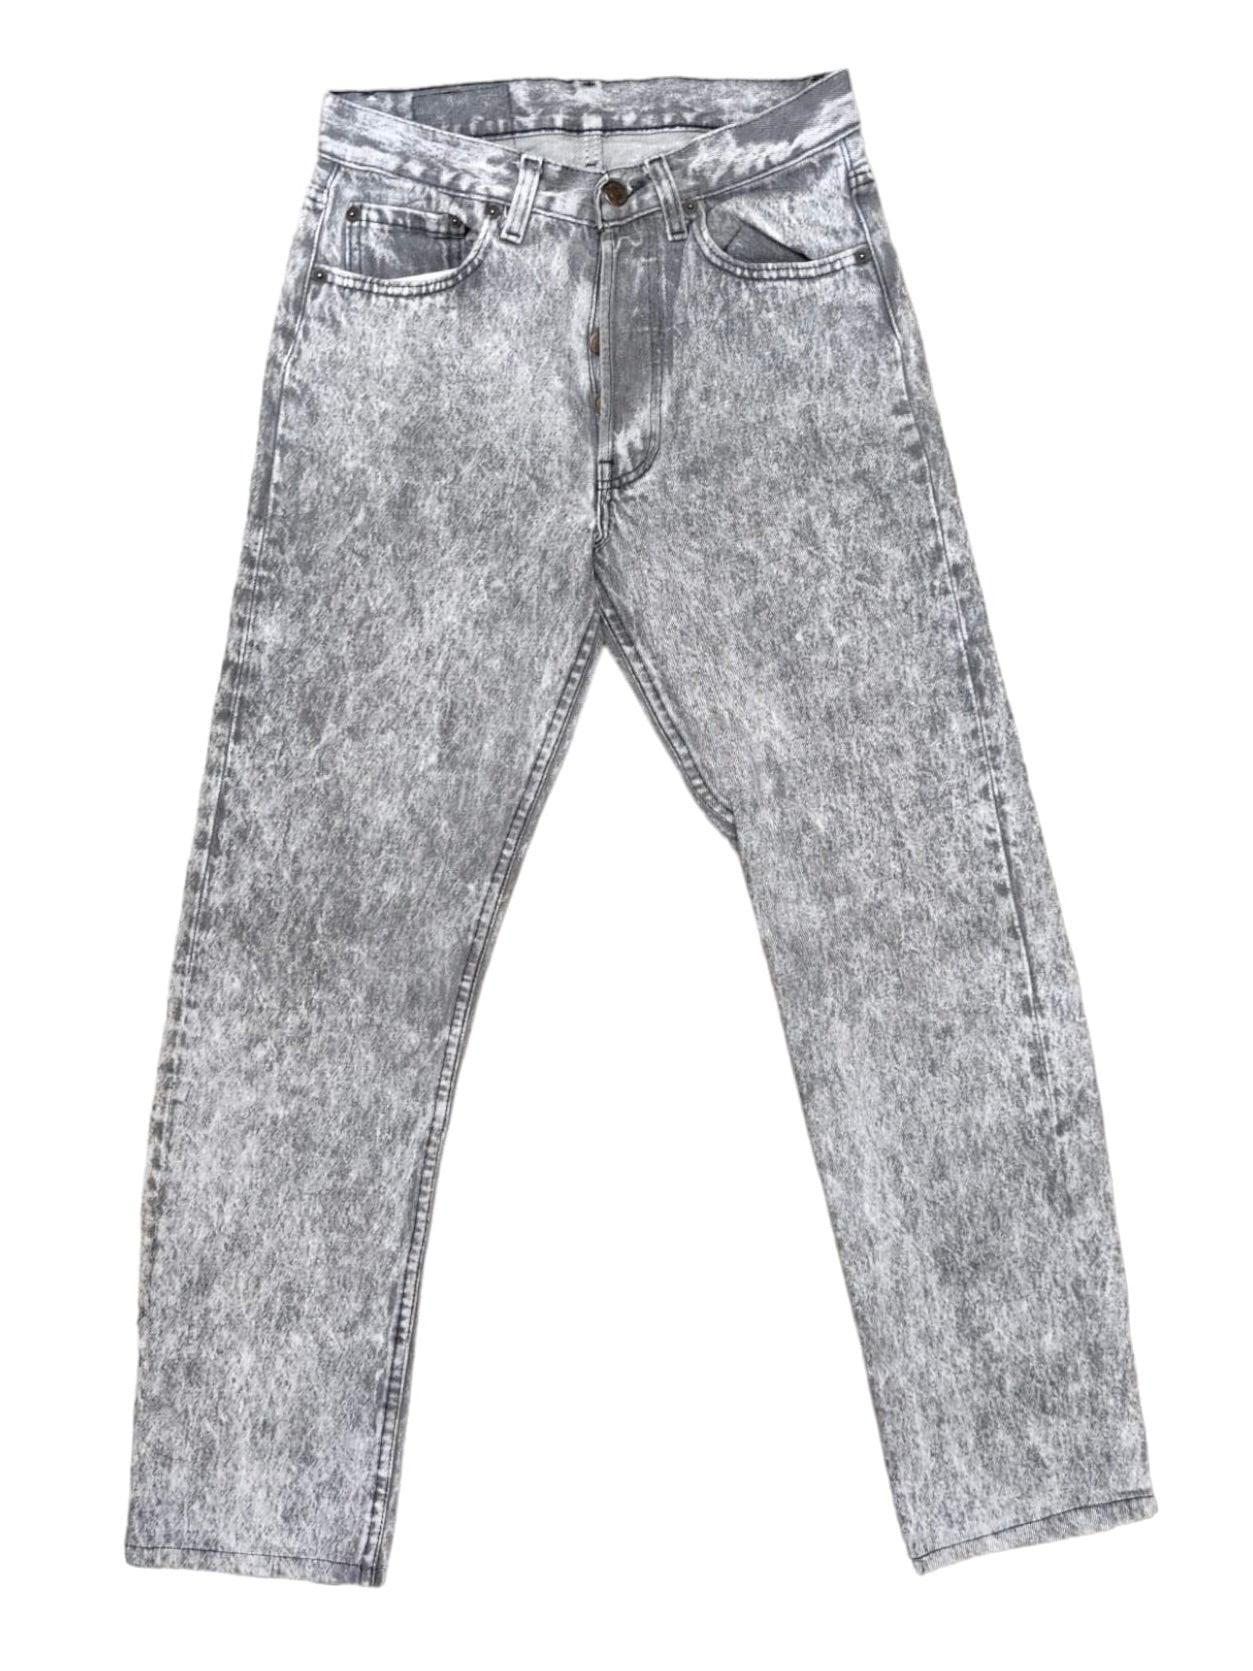 Vintage Levis 501 Grey/White Jeans (W29/L32)